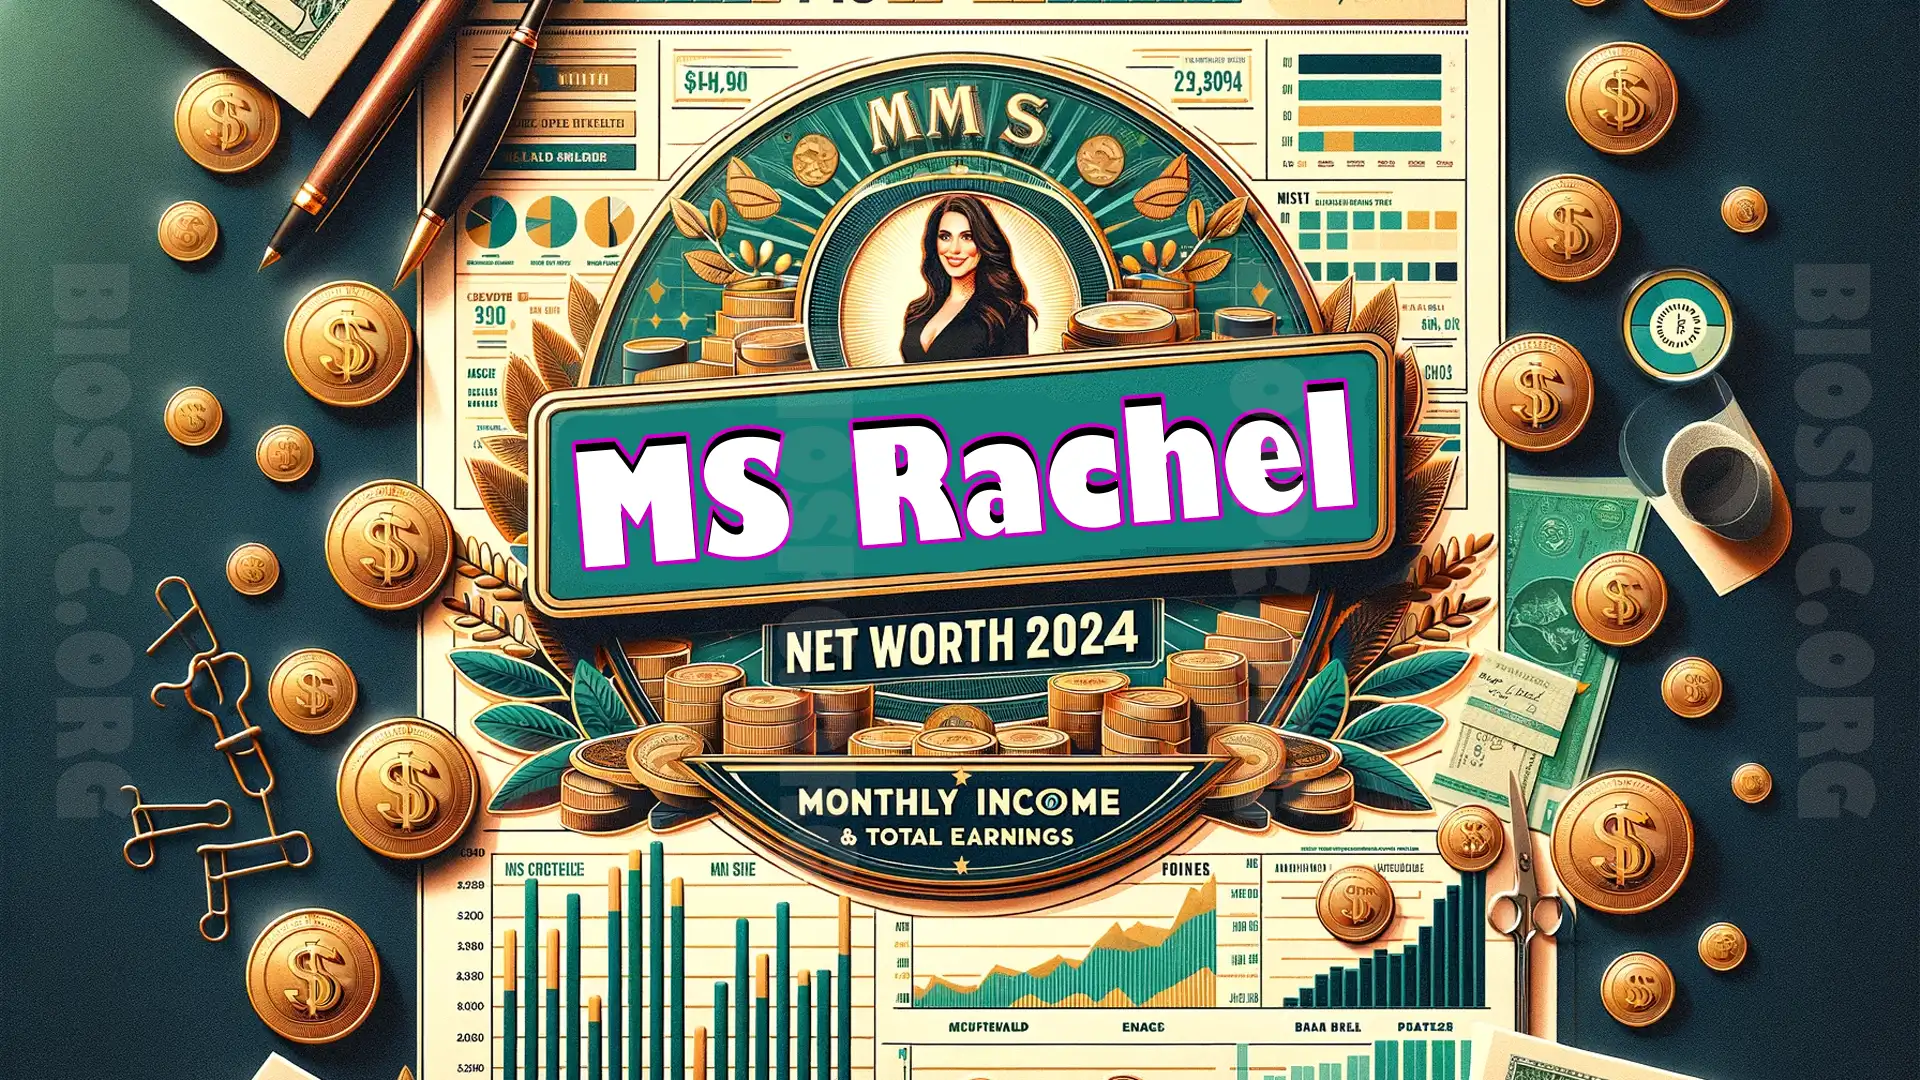 MS Rachel Net Worth 2024 Singing Sunshine into Millions, Counting